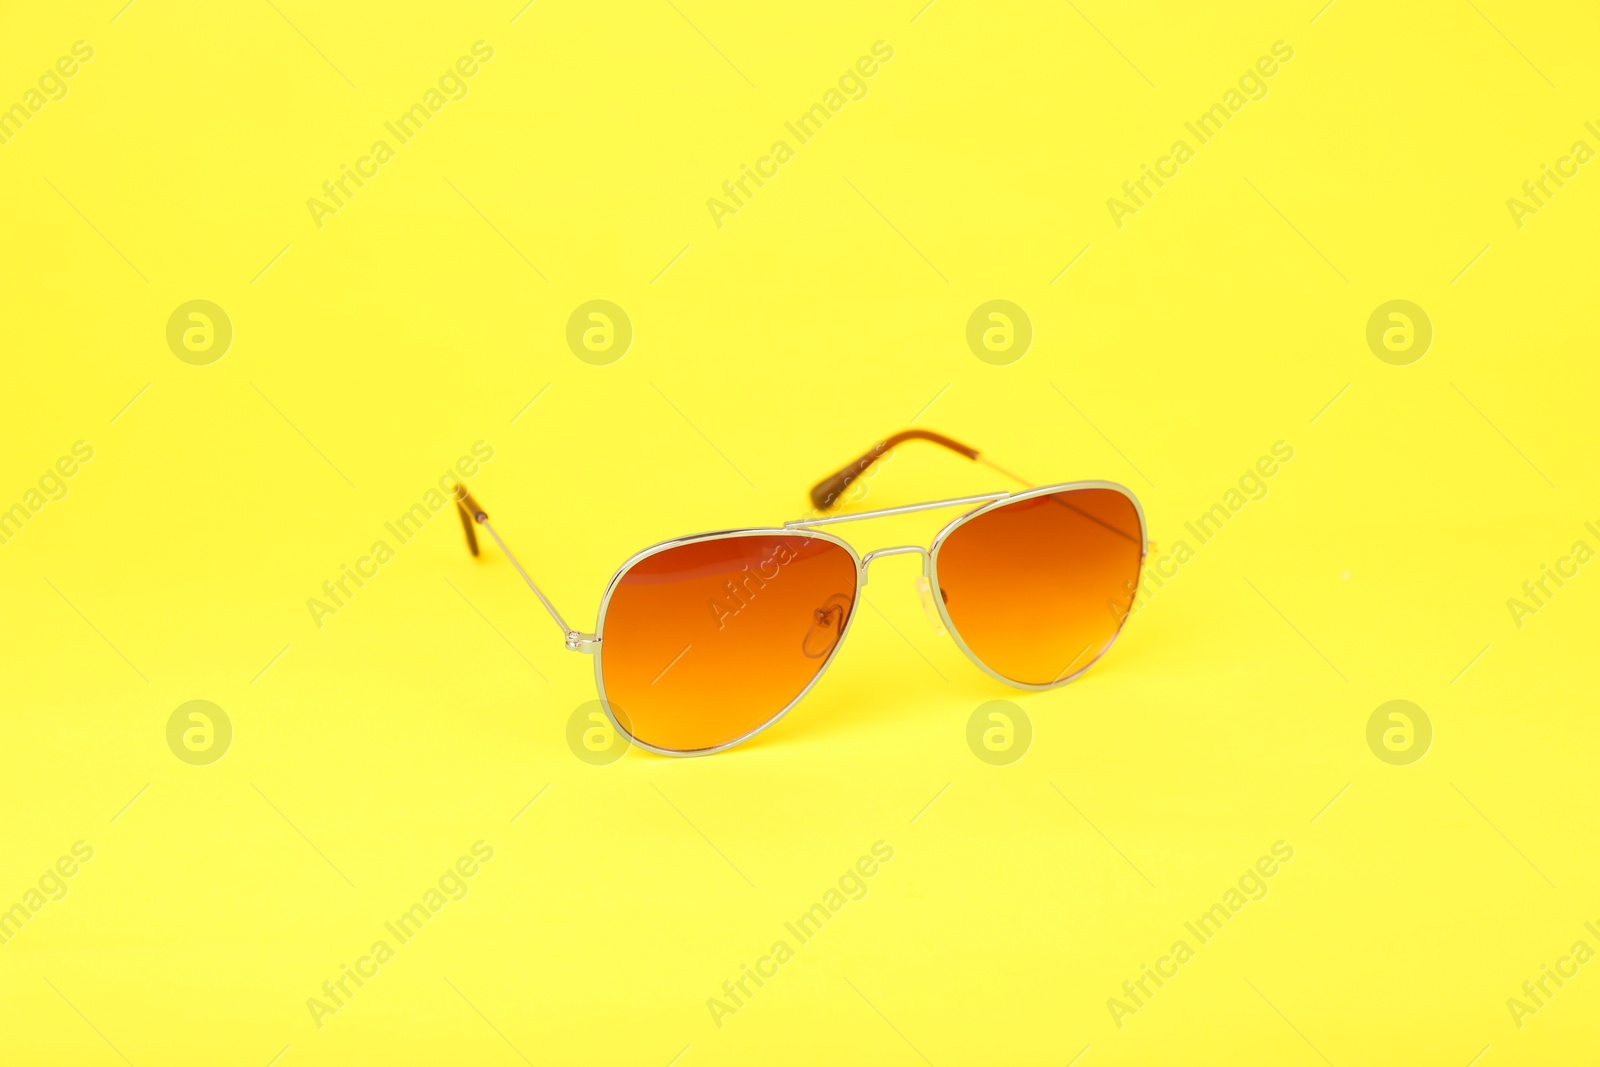 Photo of Stylish pair of sunglasses on yellow background